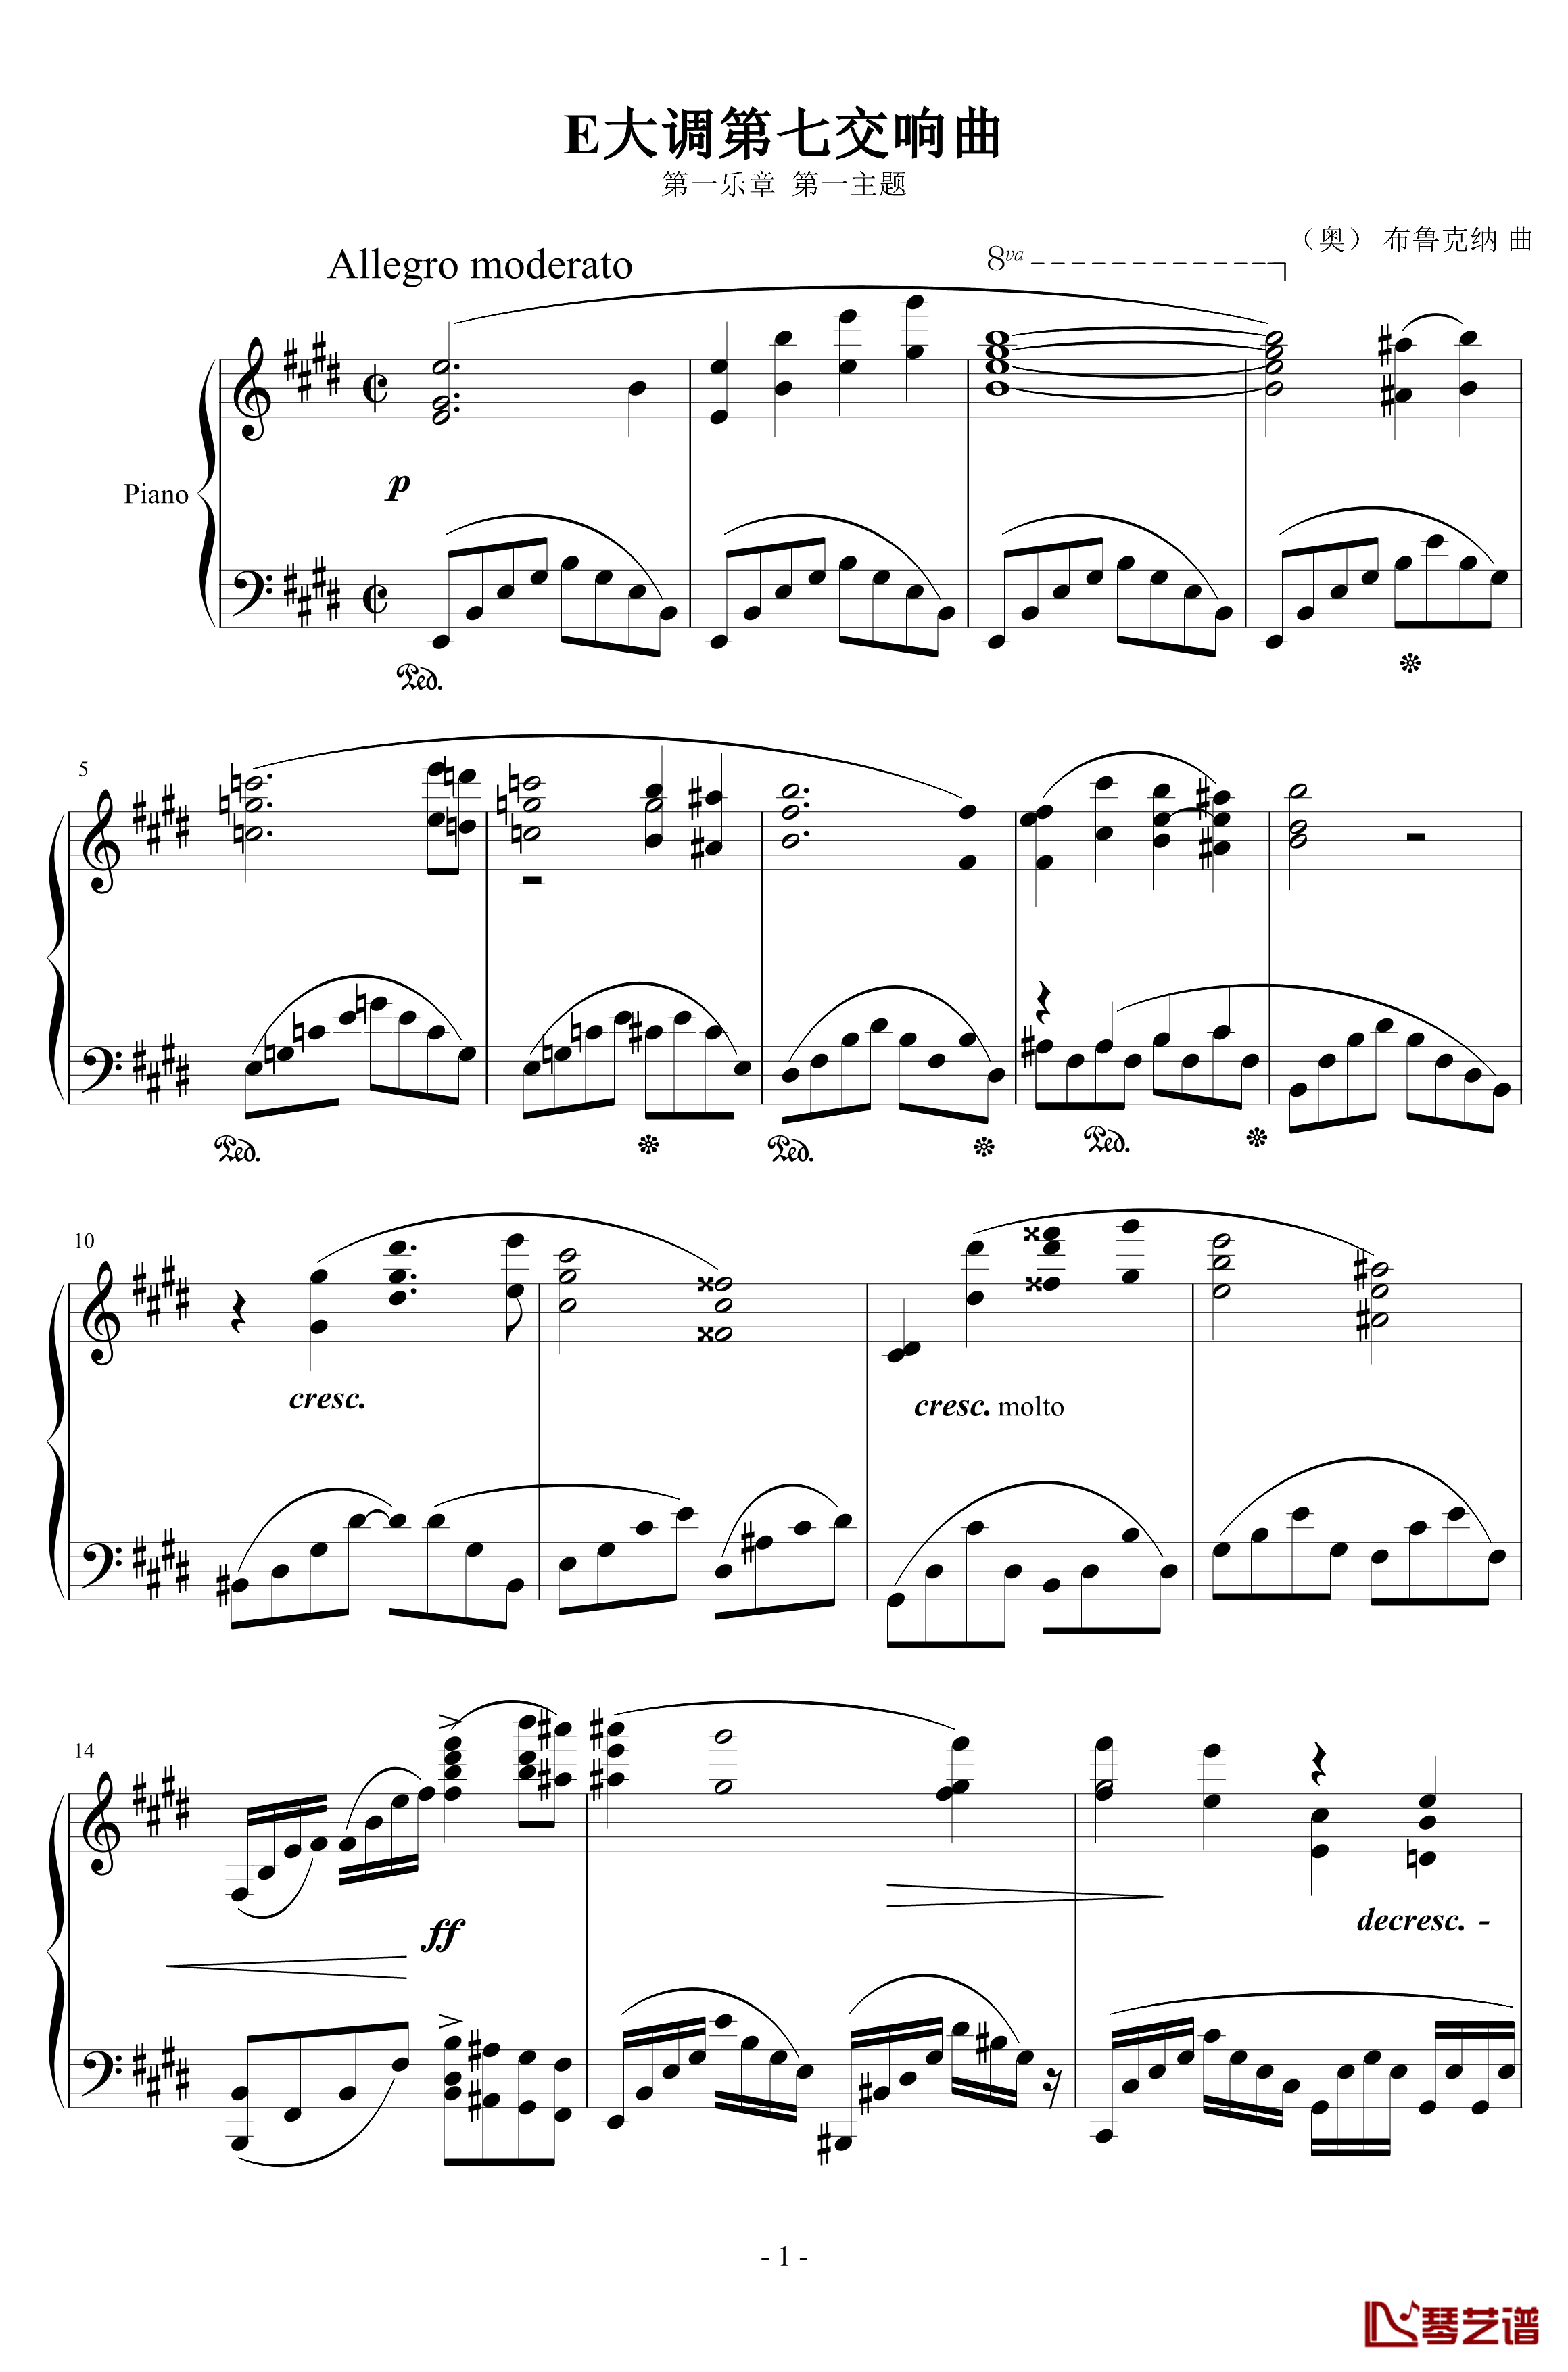 E大调第七交响曲钢琴谱-第一乐章第一主题-布鲁克纳1